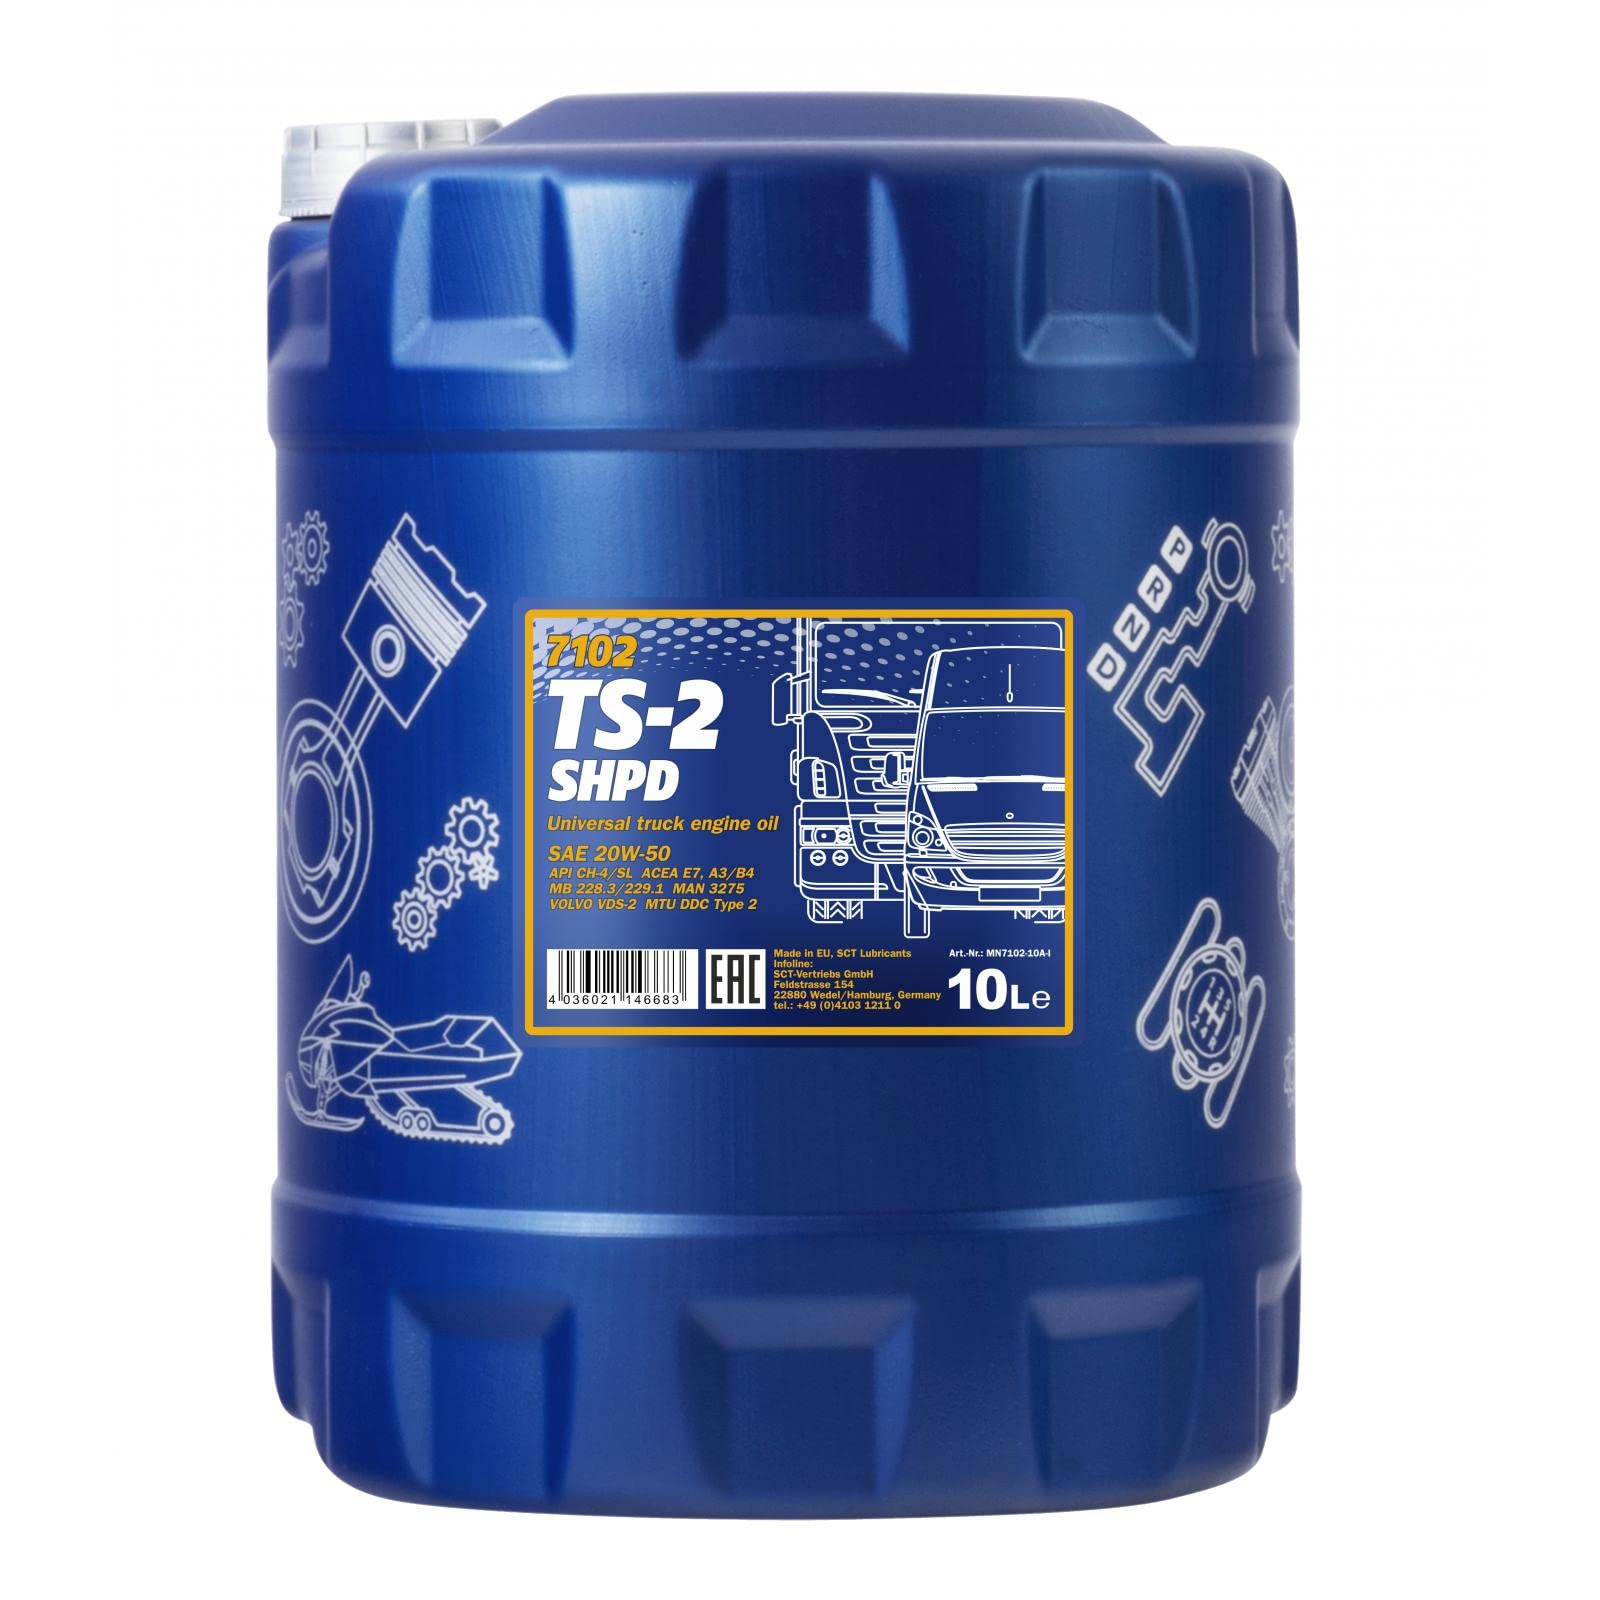 10 Liter Orignal MANNOL Motoröl TS-2 SHPD 20W-50 API CH-4/CG-4/CF-4/SL von MANNOL